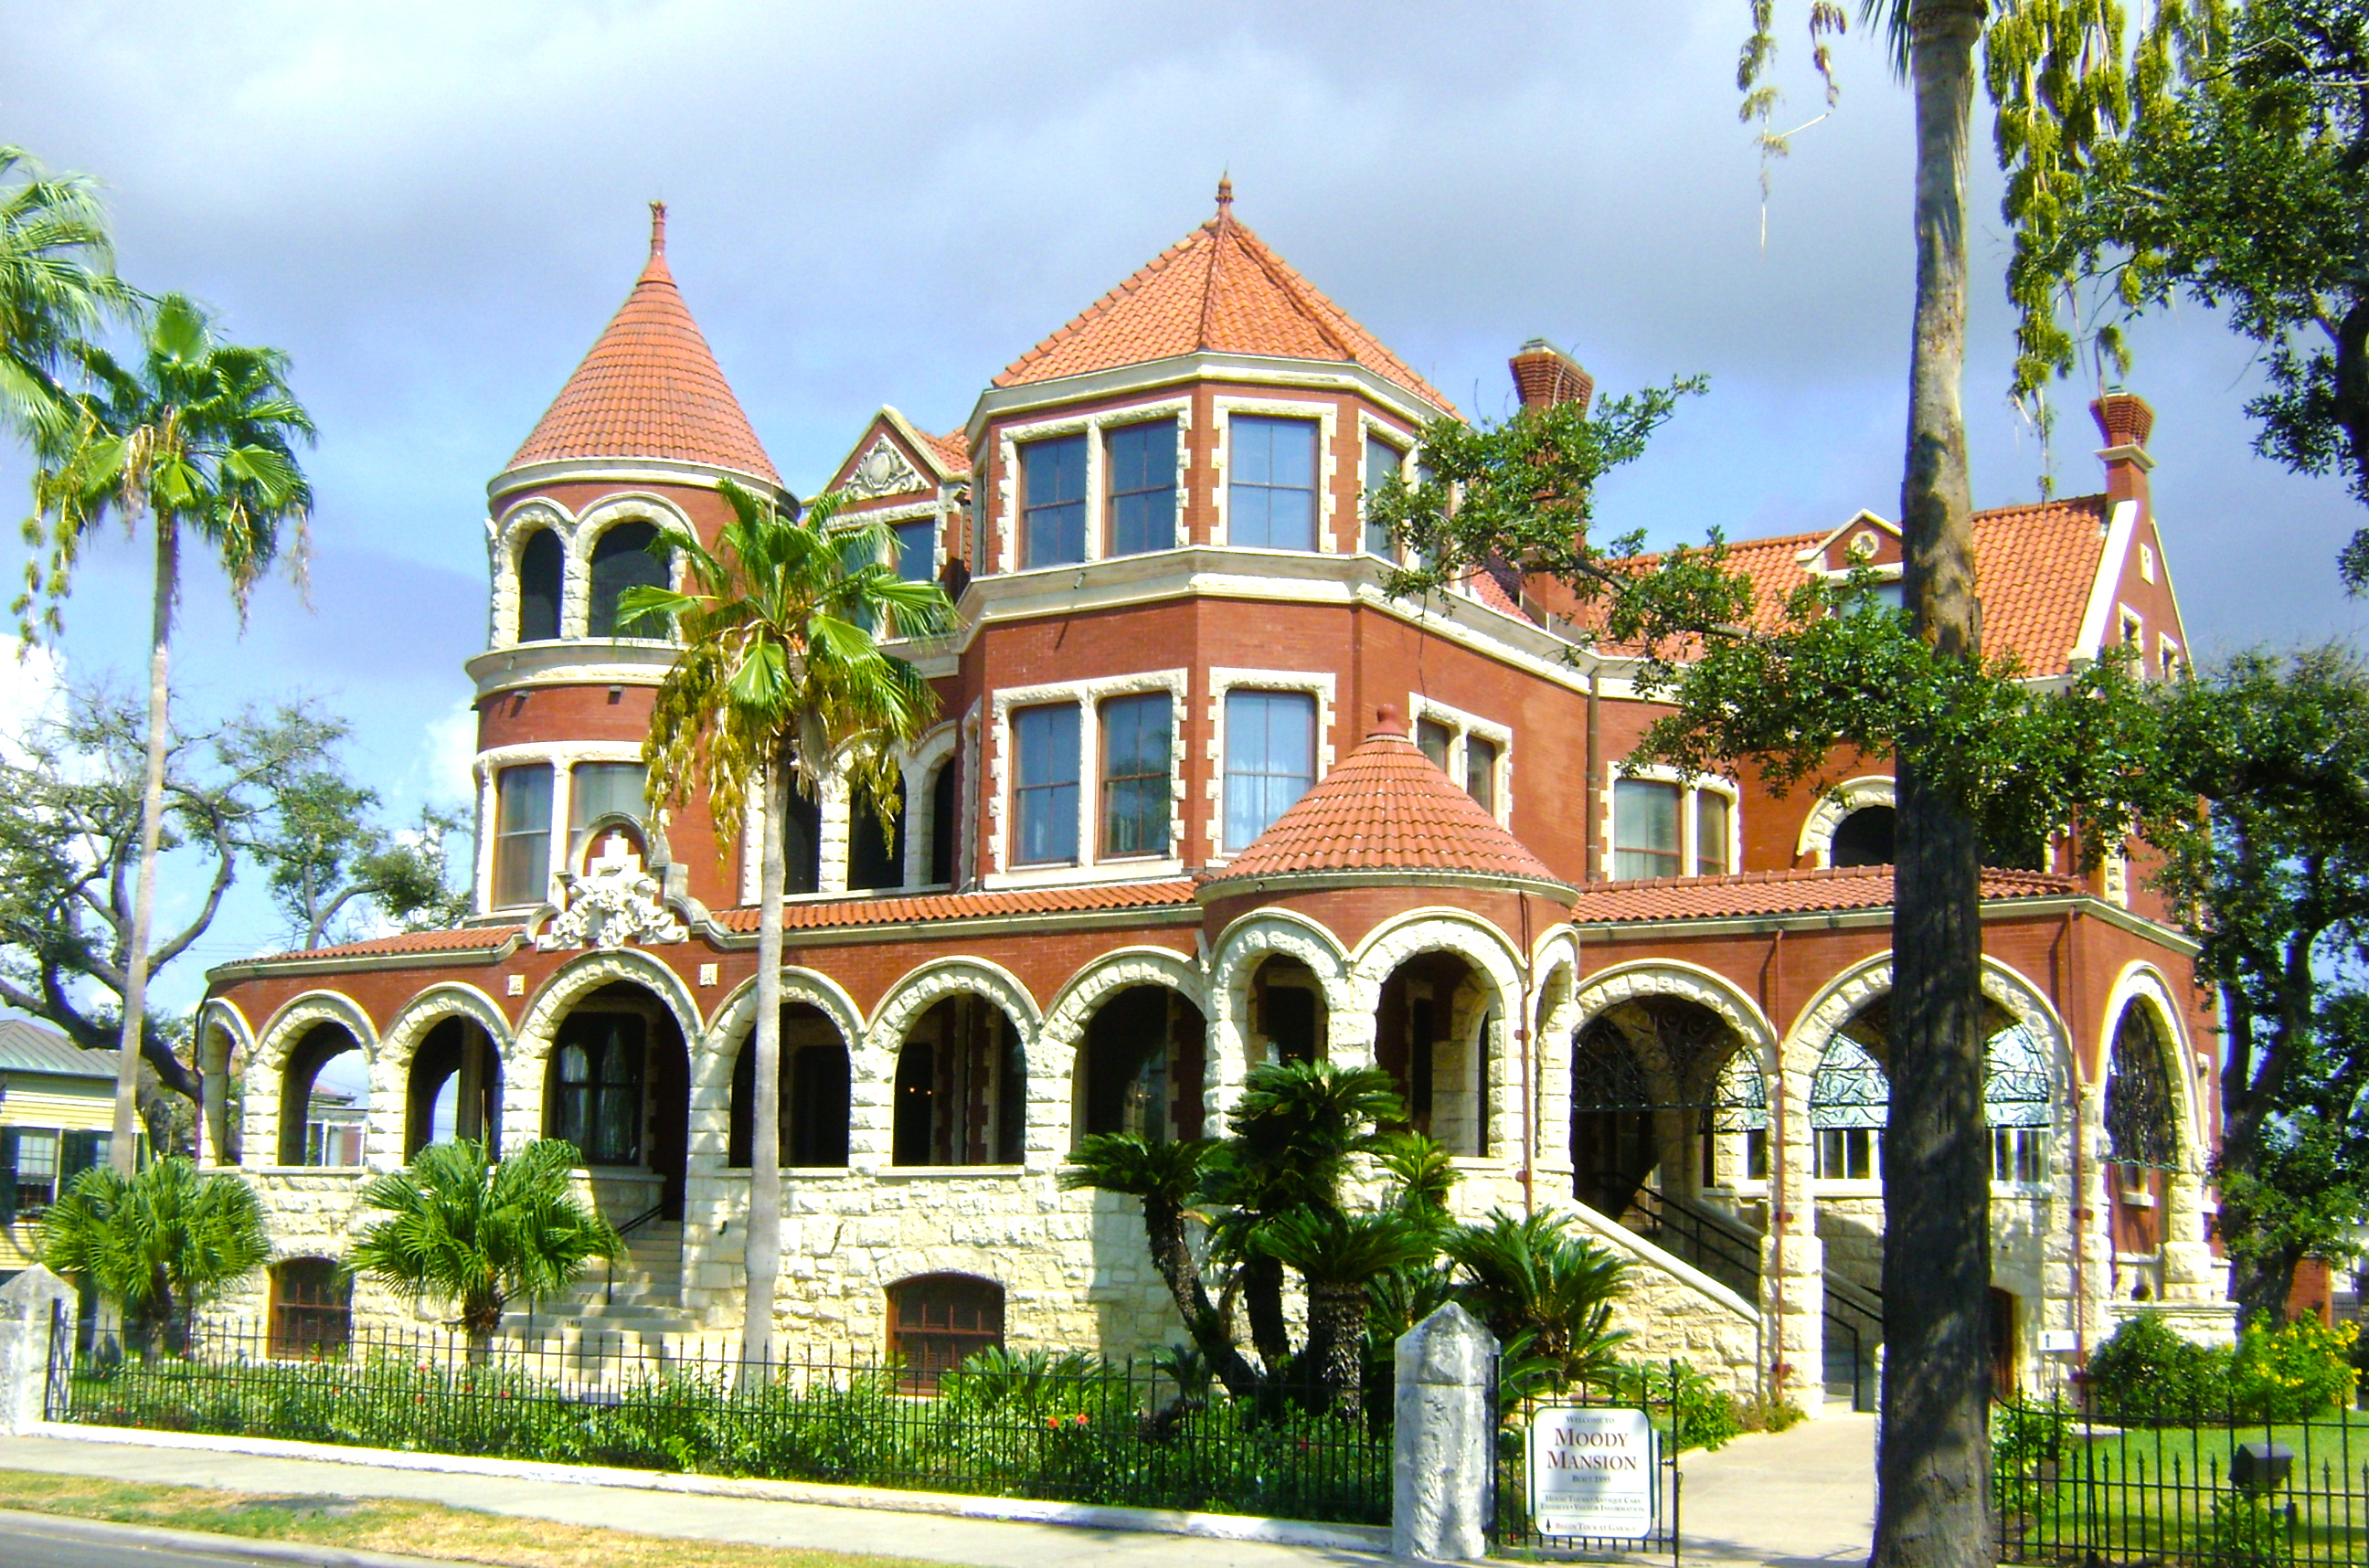 Galveton's Moody Mansion